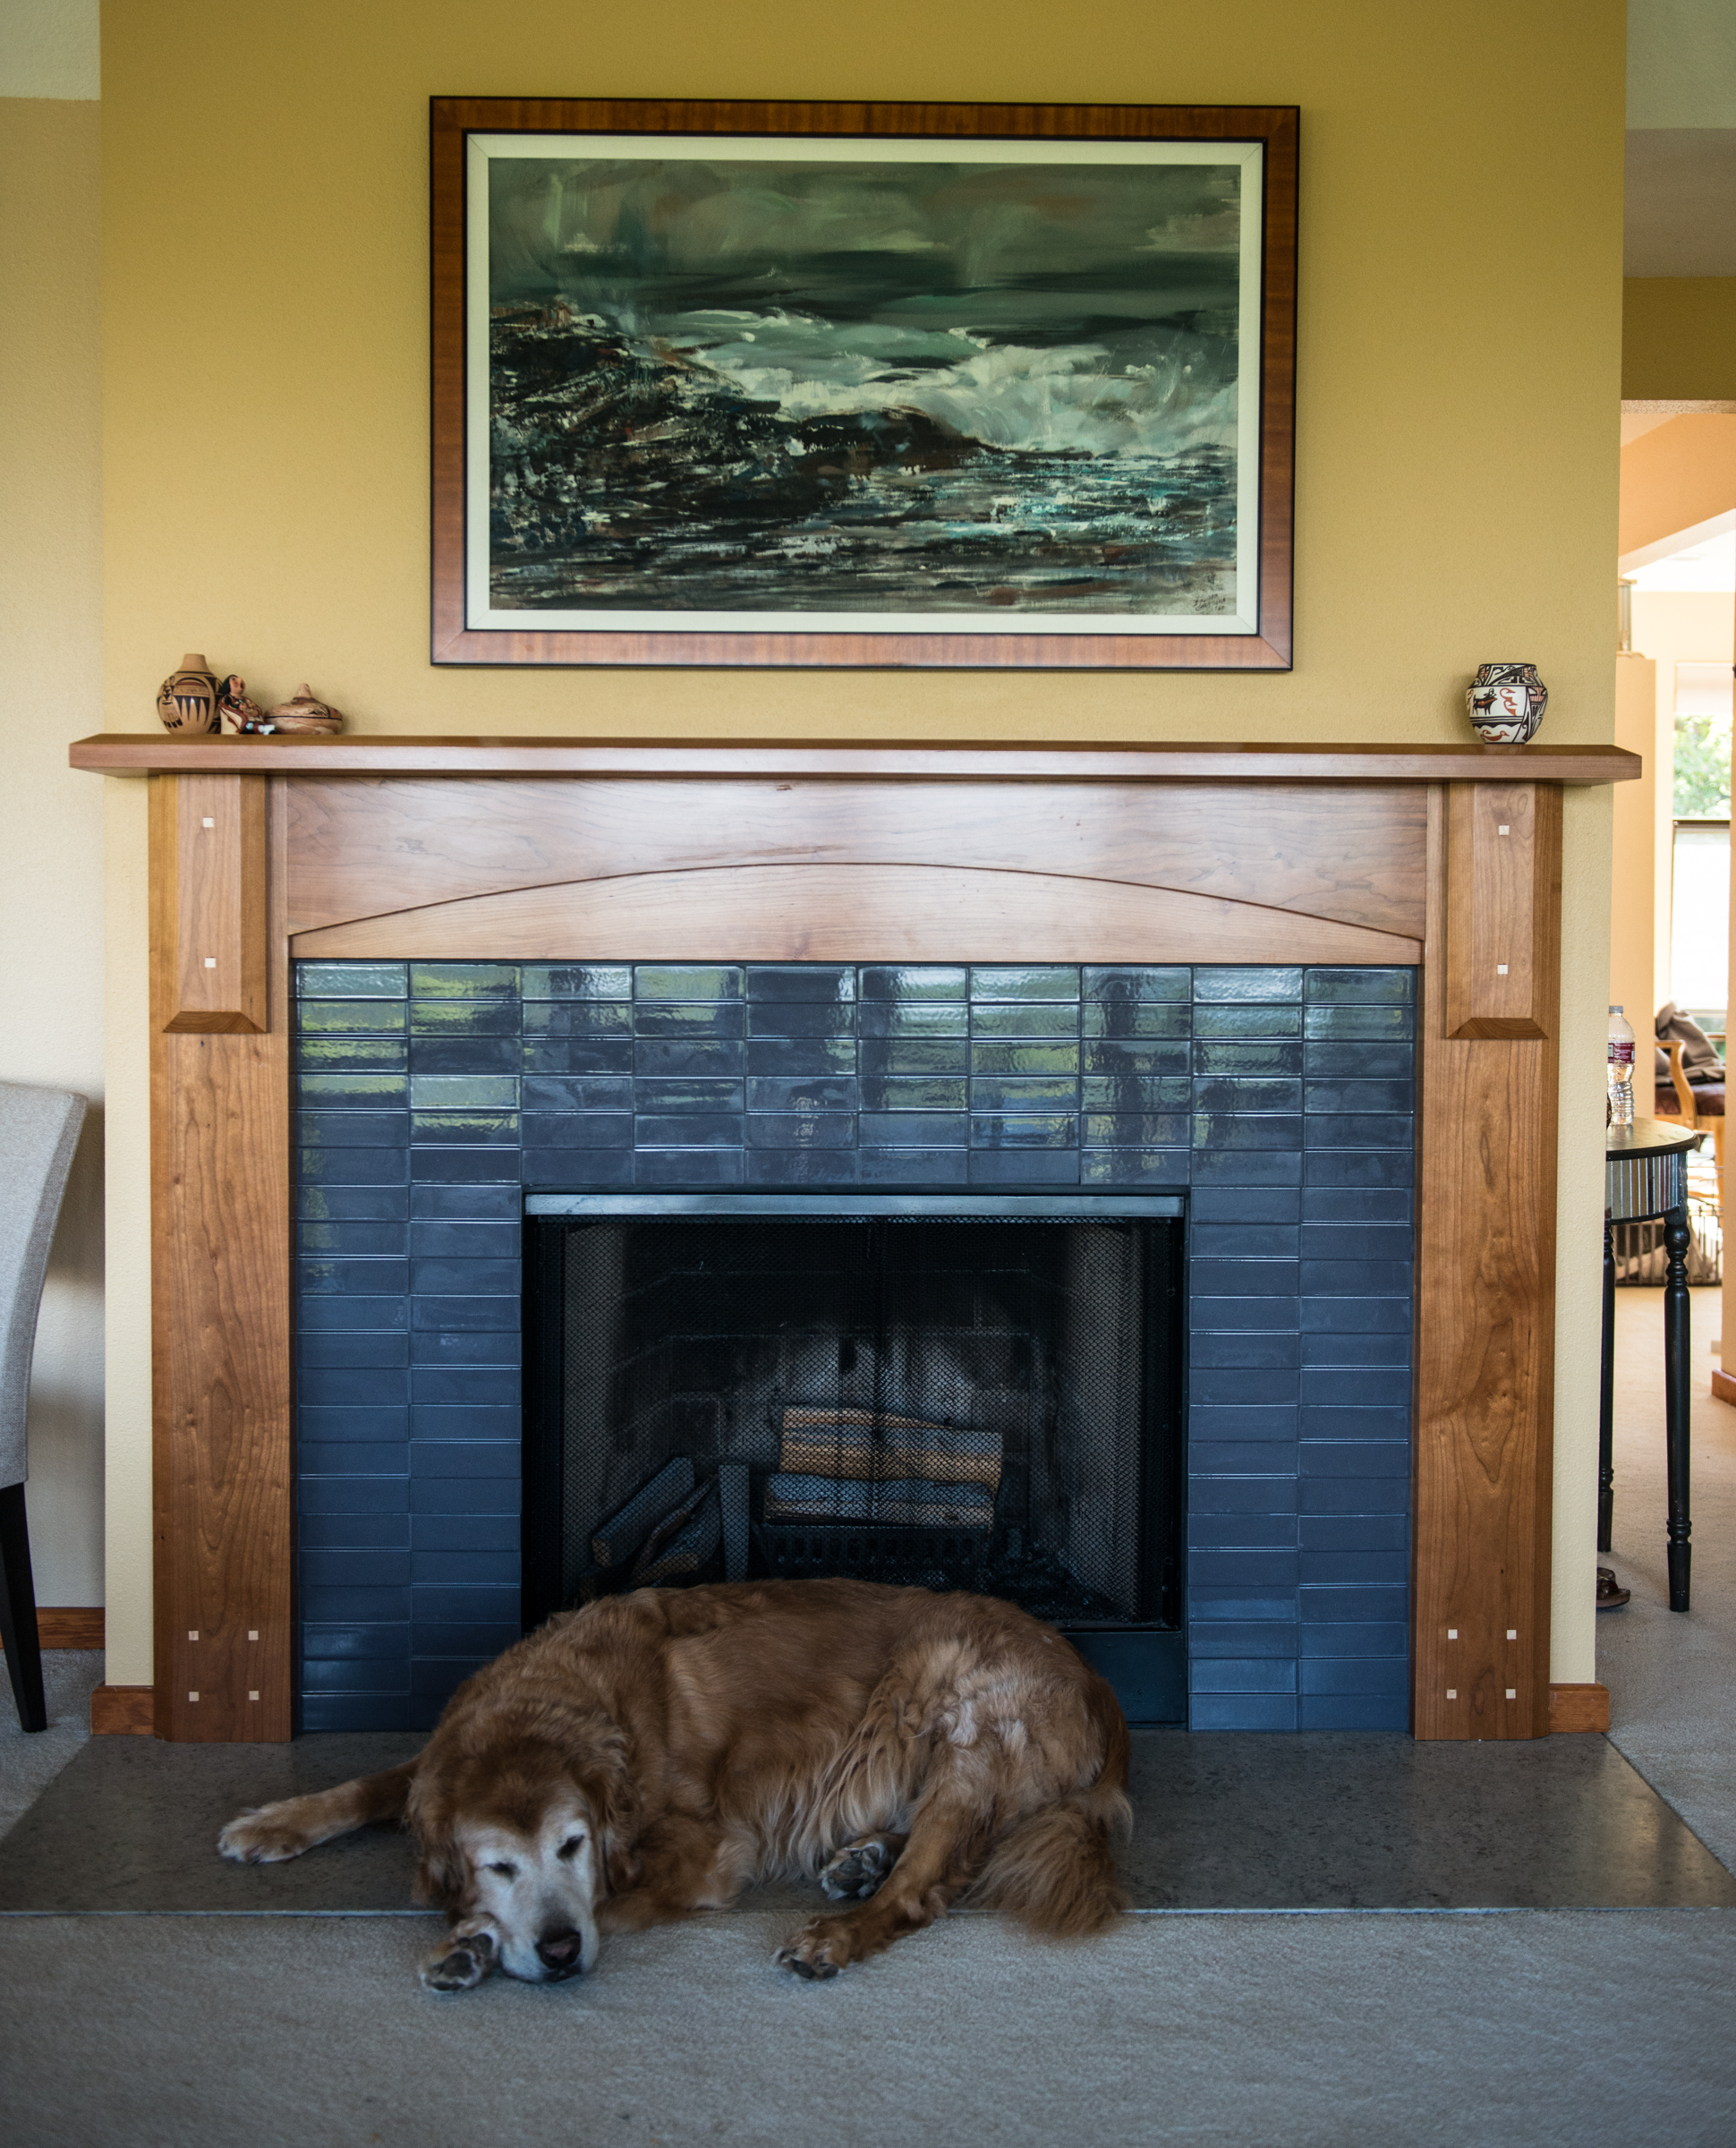 Fireplace with dog.jpg